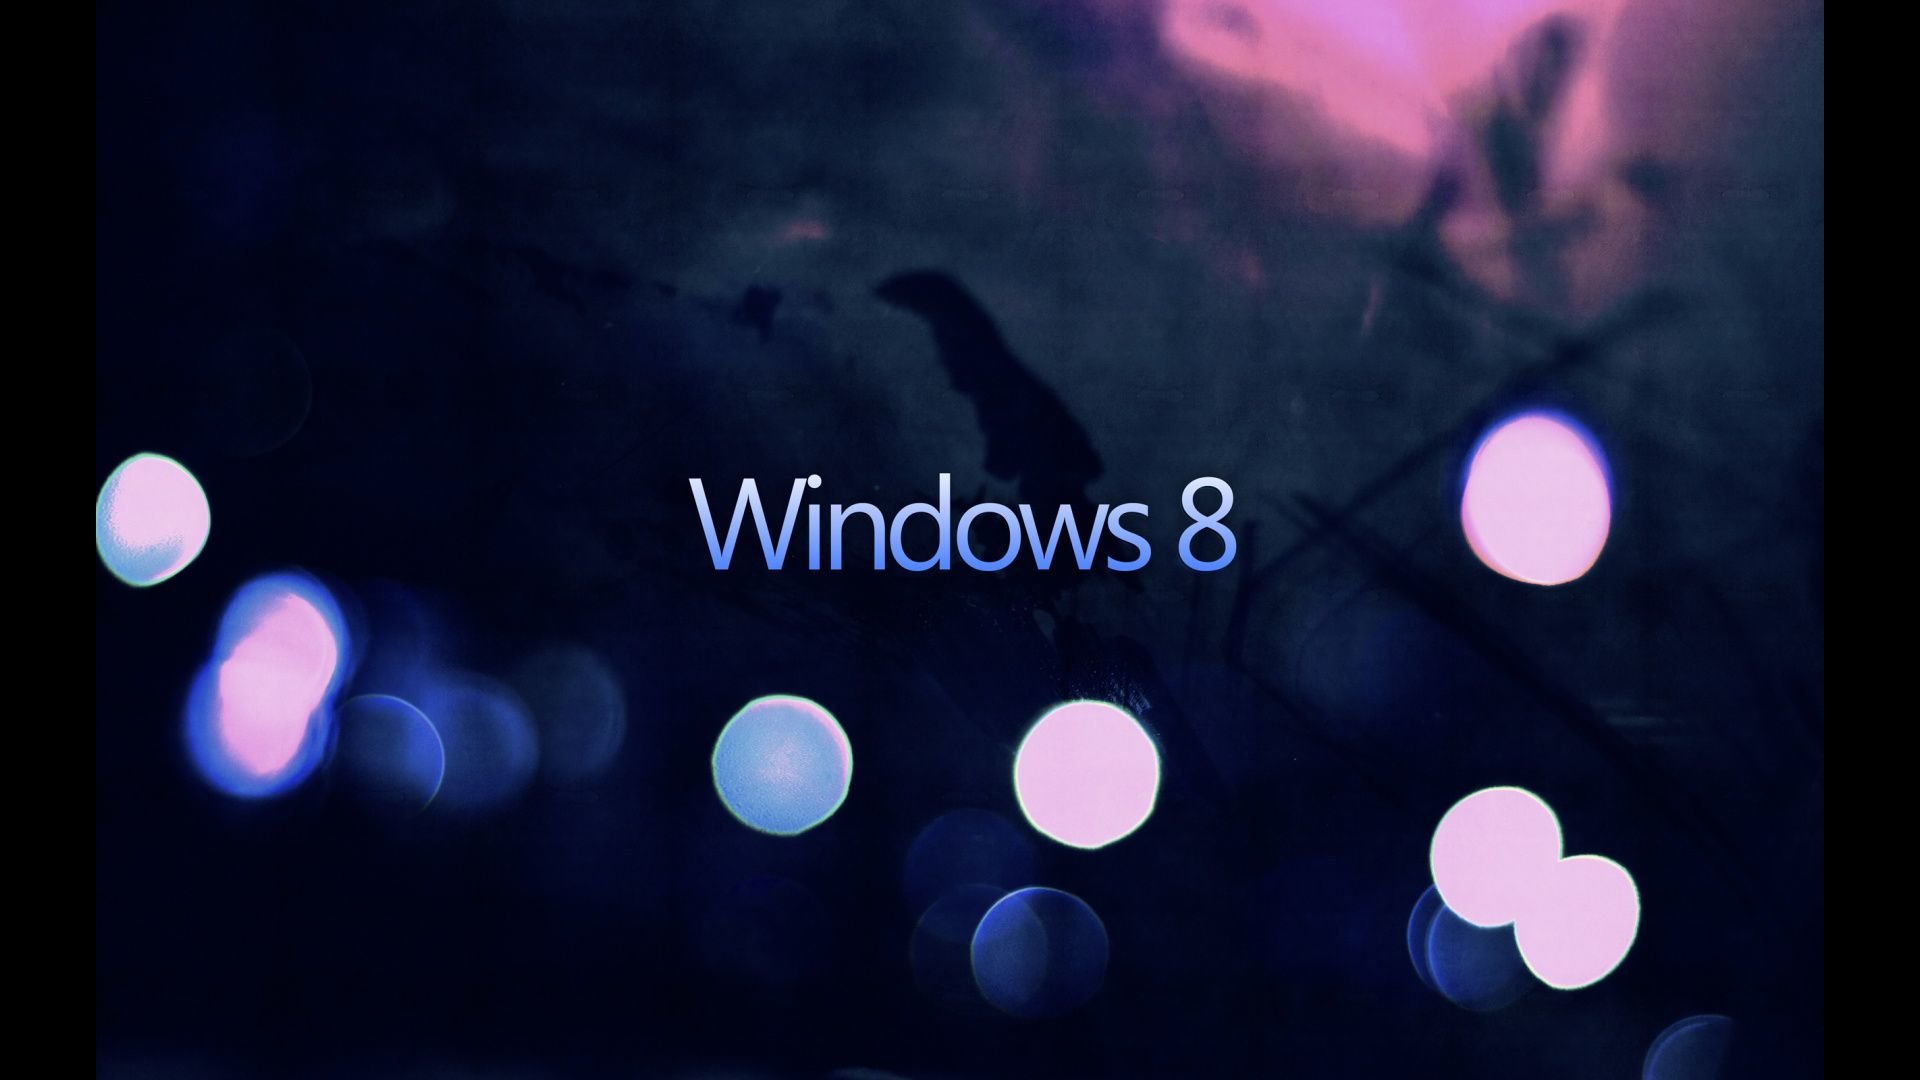 Free download Windows 8 wallpaper ID:78147 hd 1920x1080 for desktop